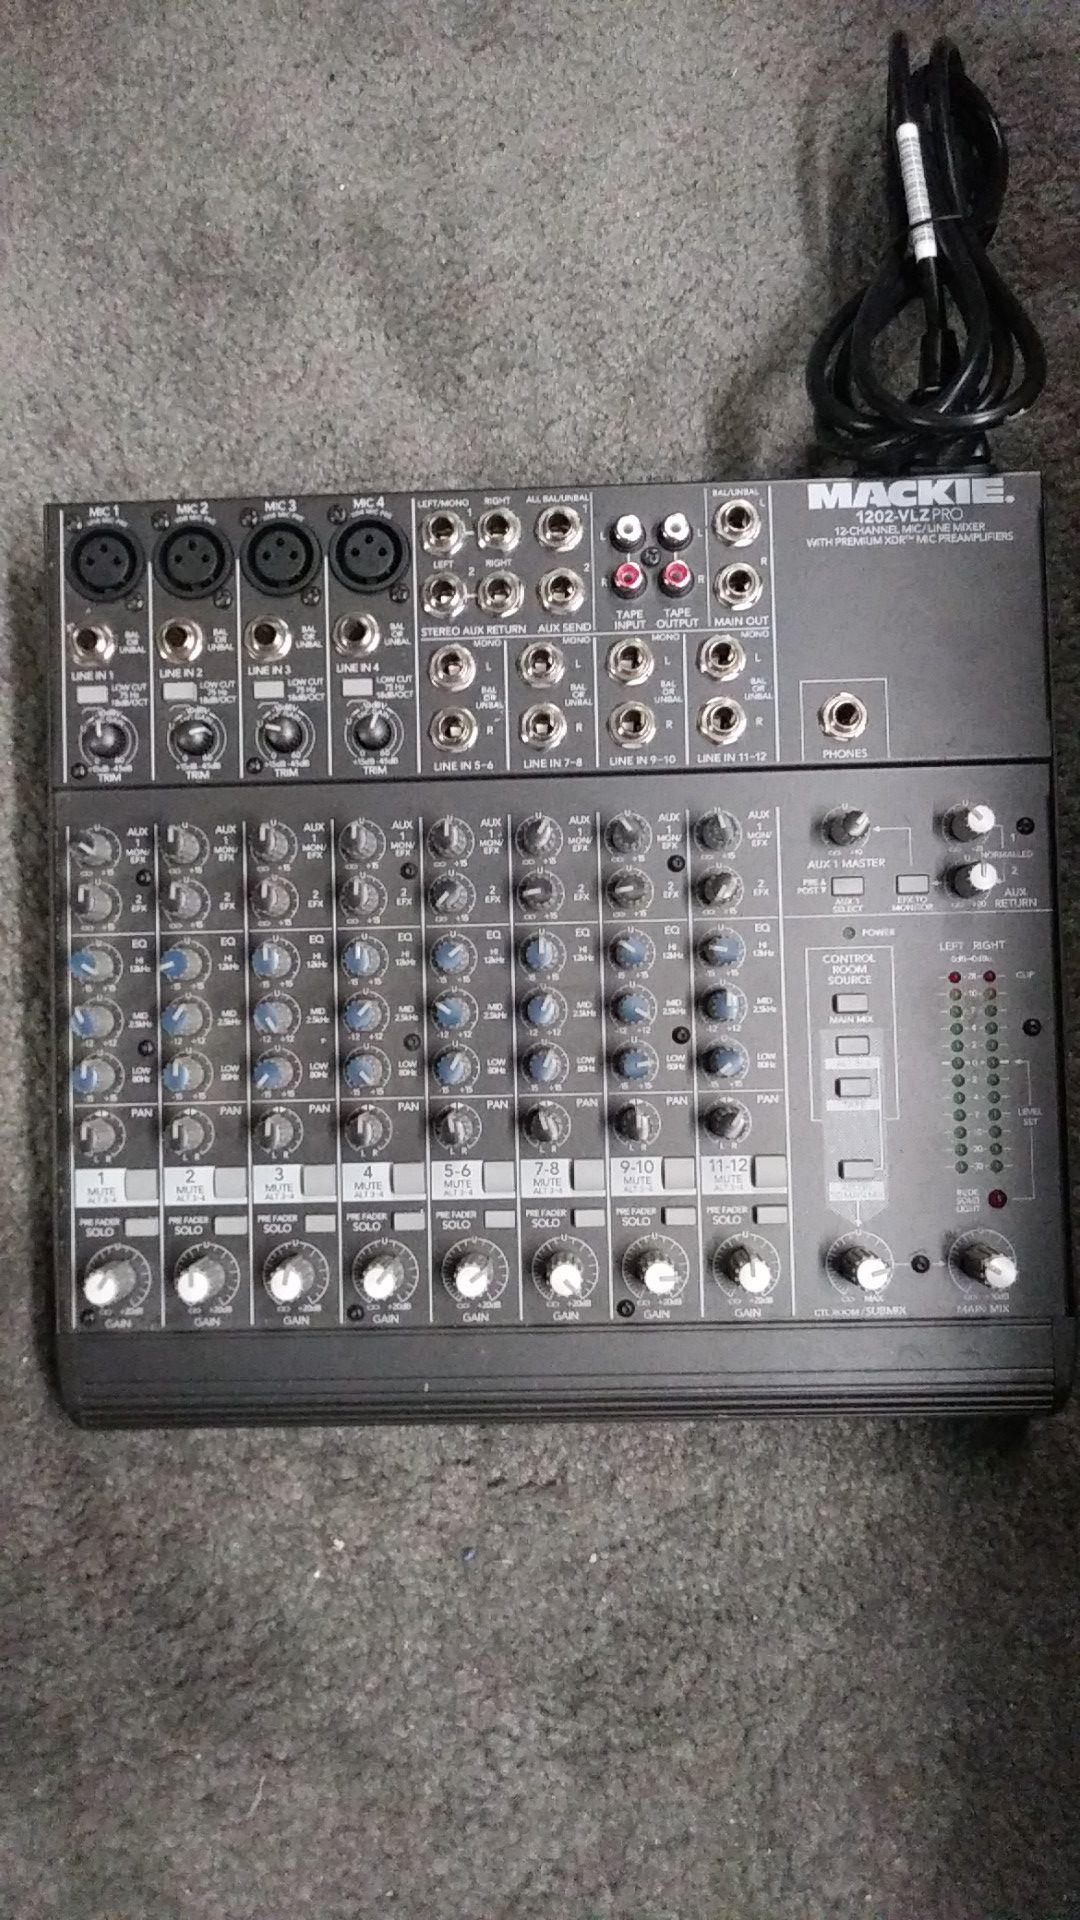 Mackie .1202-VLZ pro 12 channel mic/Line mixer